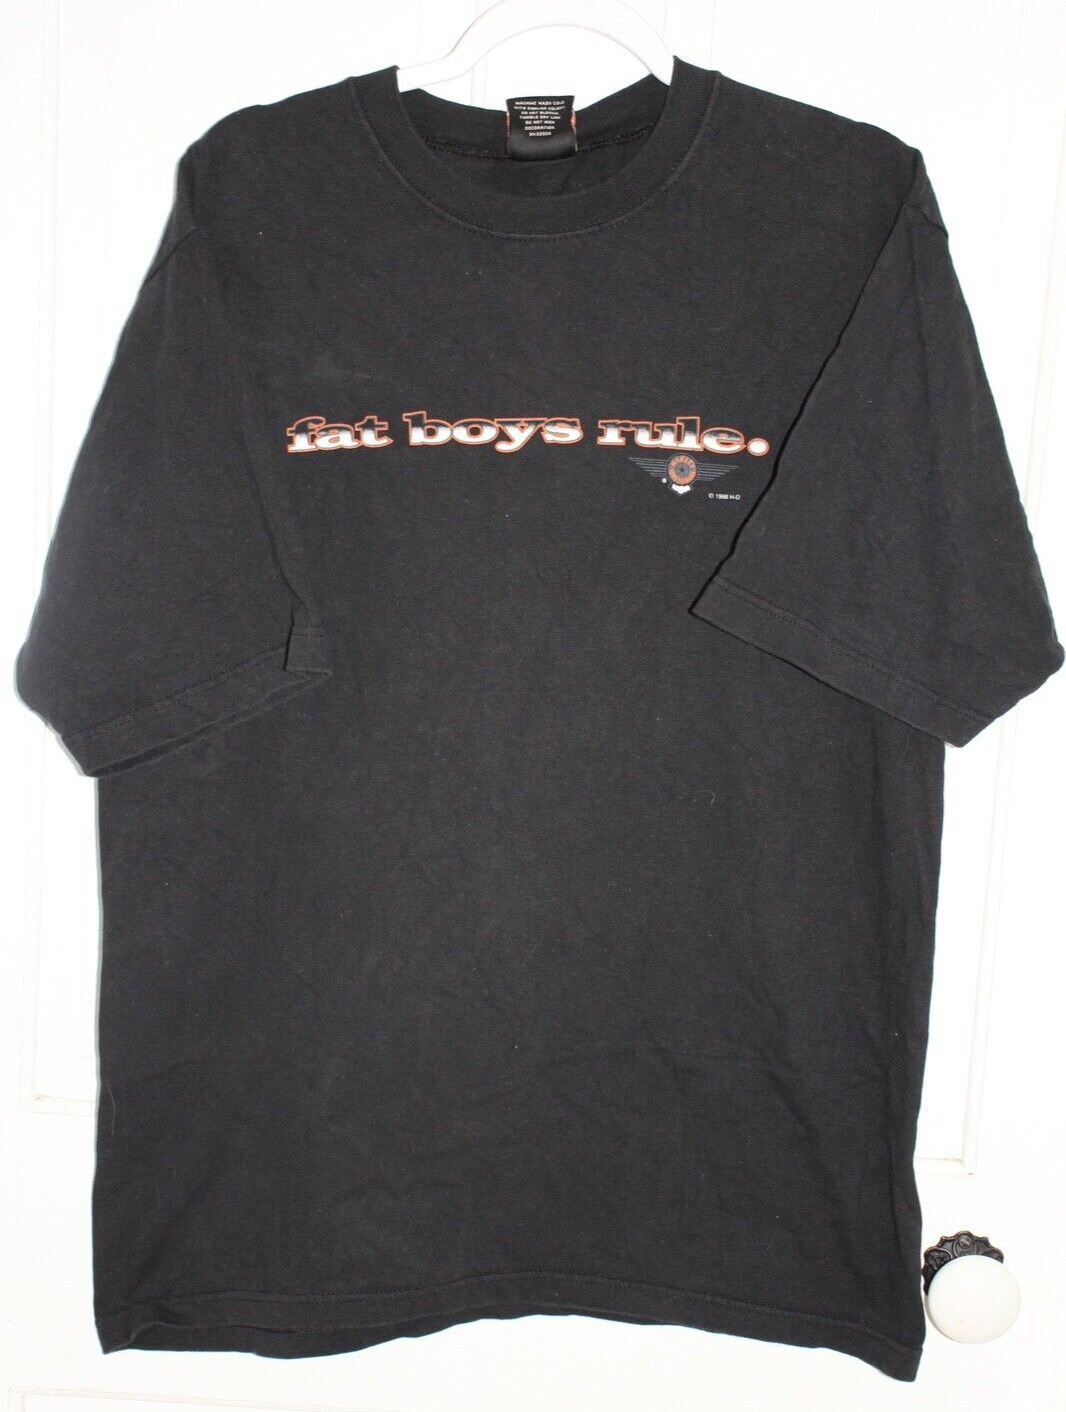 Harley-Davidson Men\'s Sz L Large Fat Boys Rule 1996 Shirt - USA Black